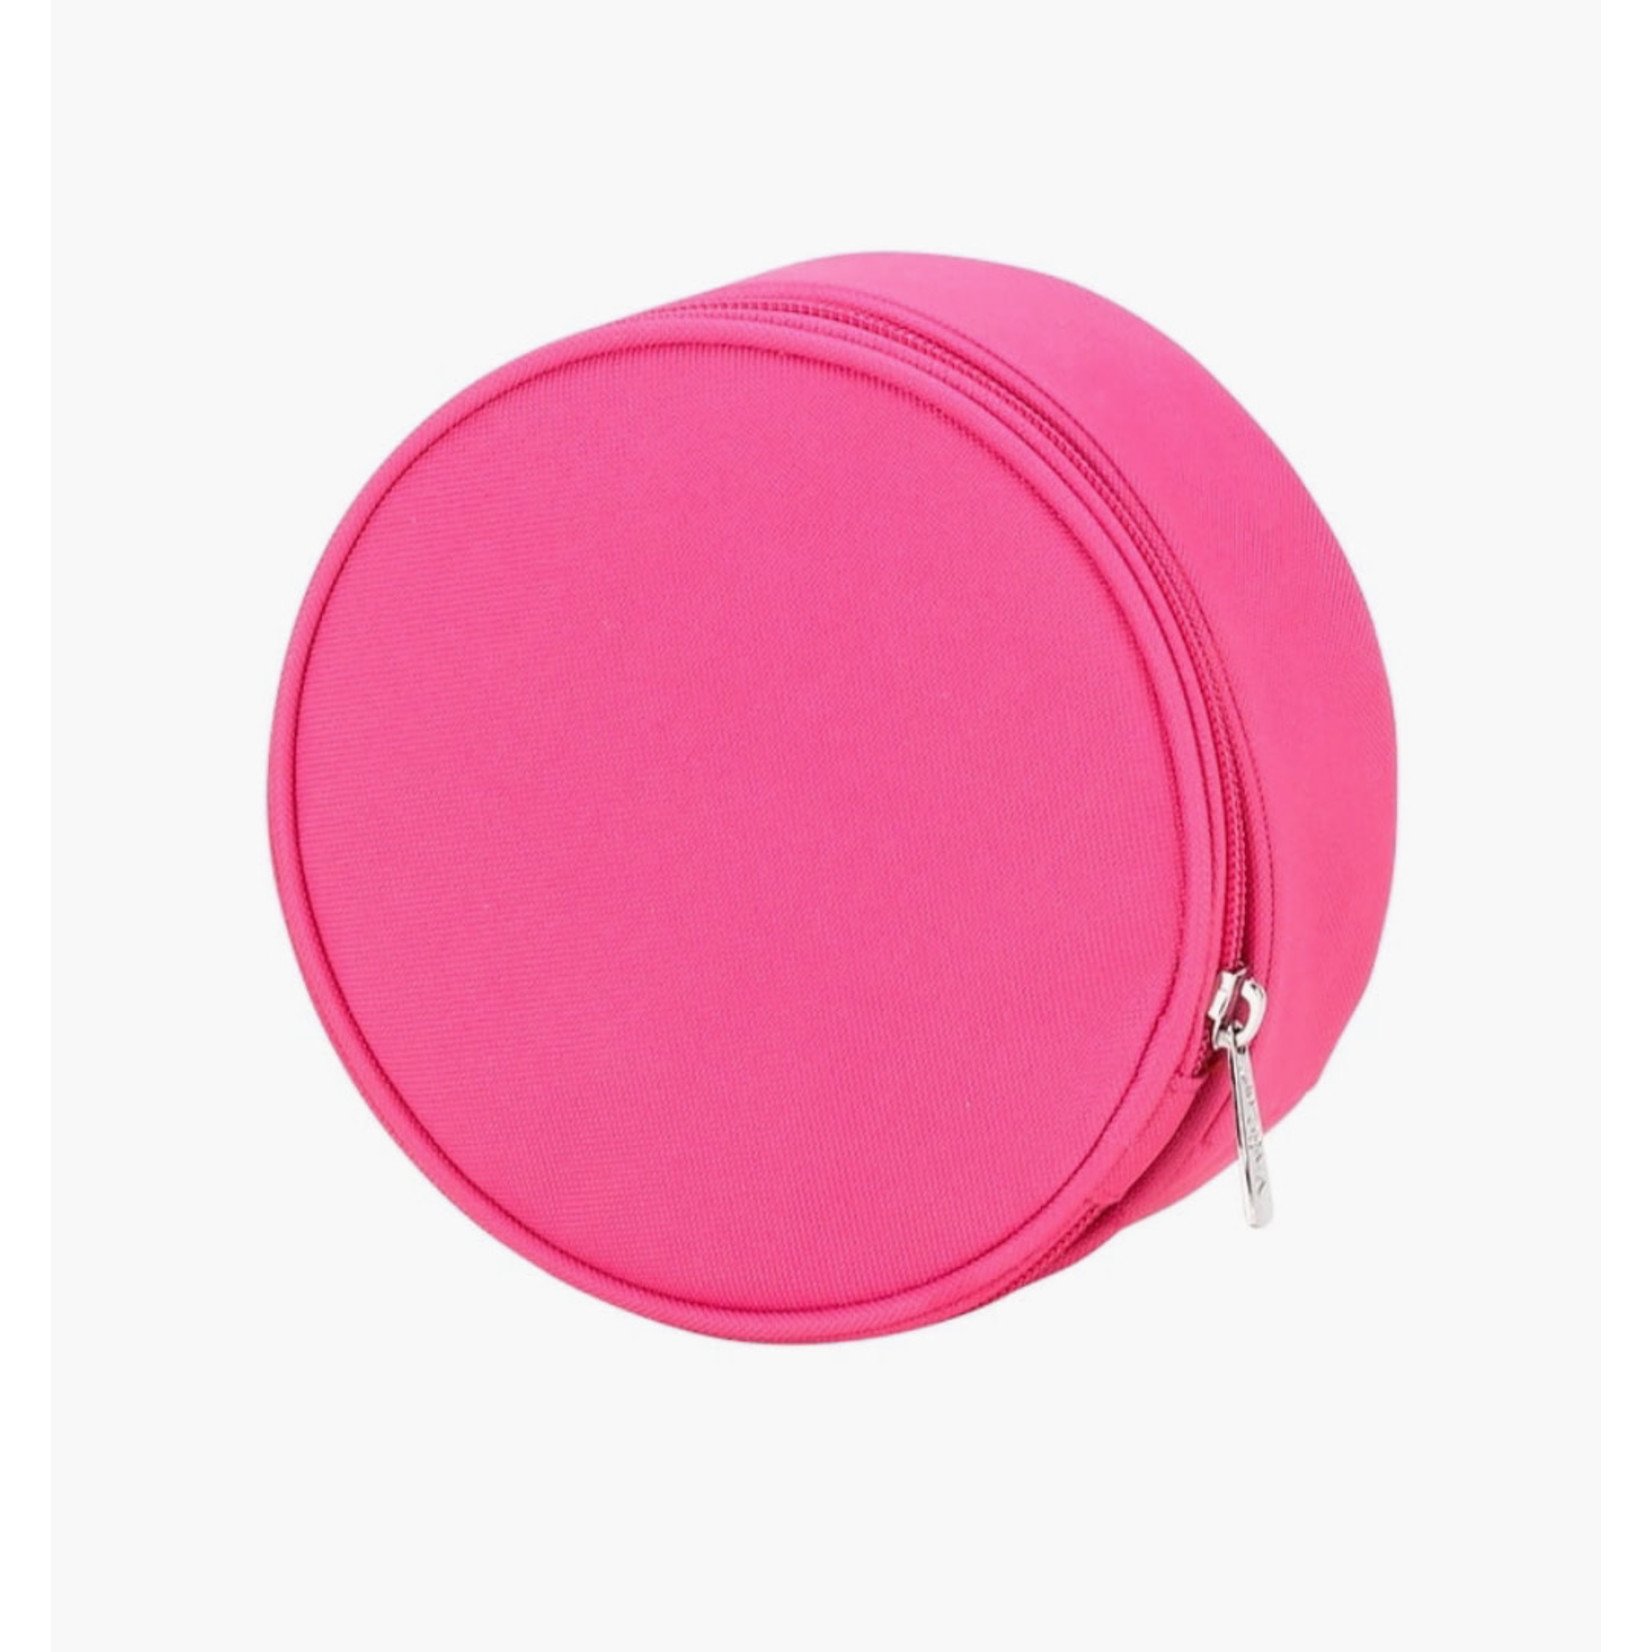 Viv & Lou Jewelry Case - Hot Pink: 3” H x 6” Diameter